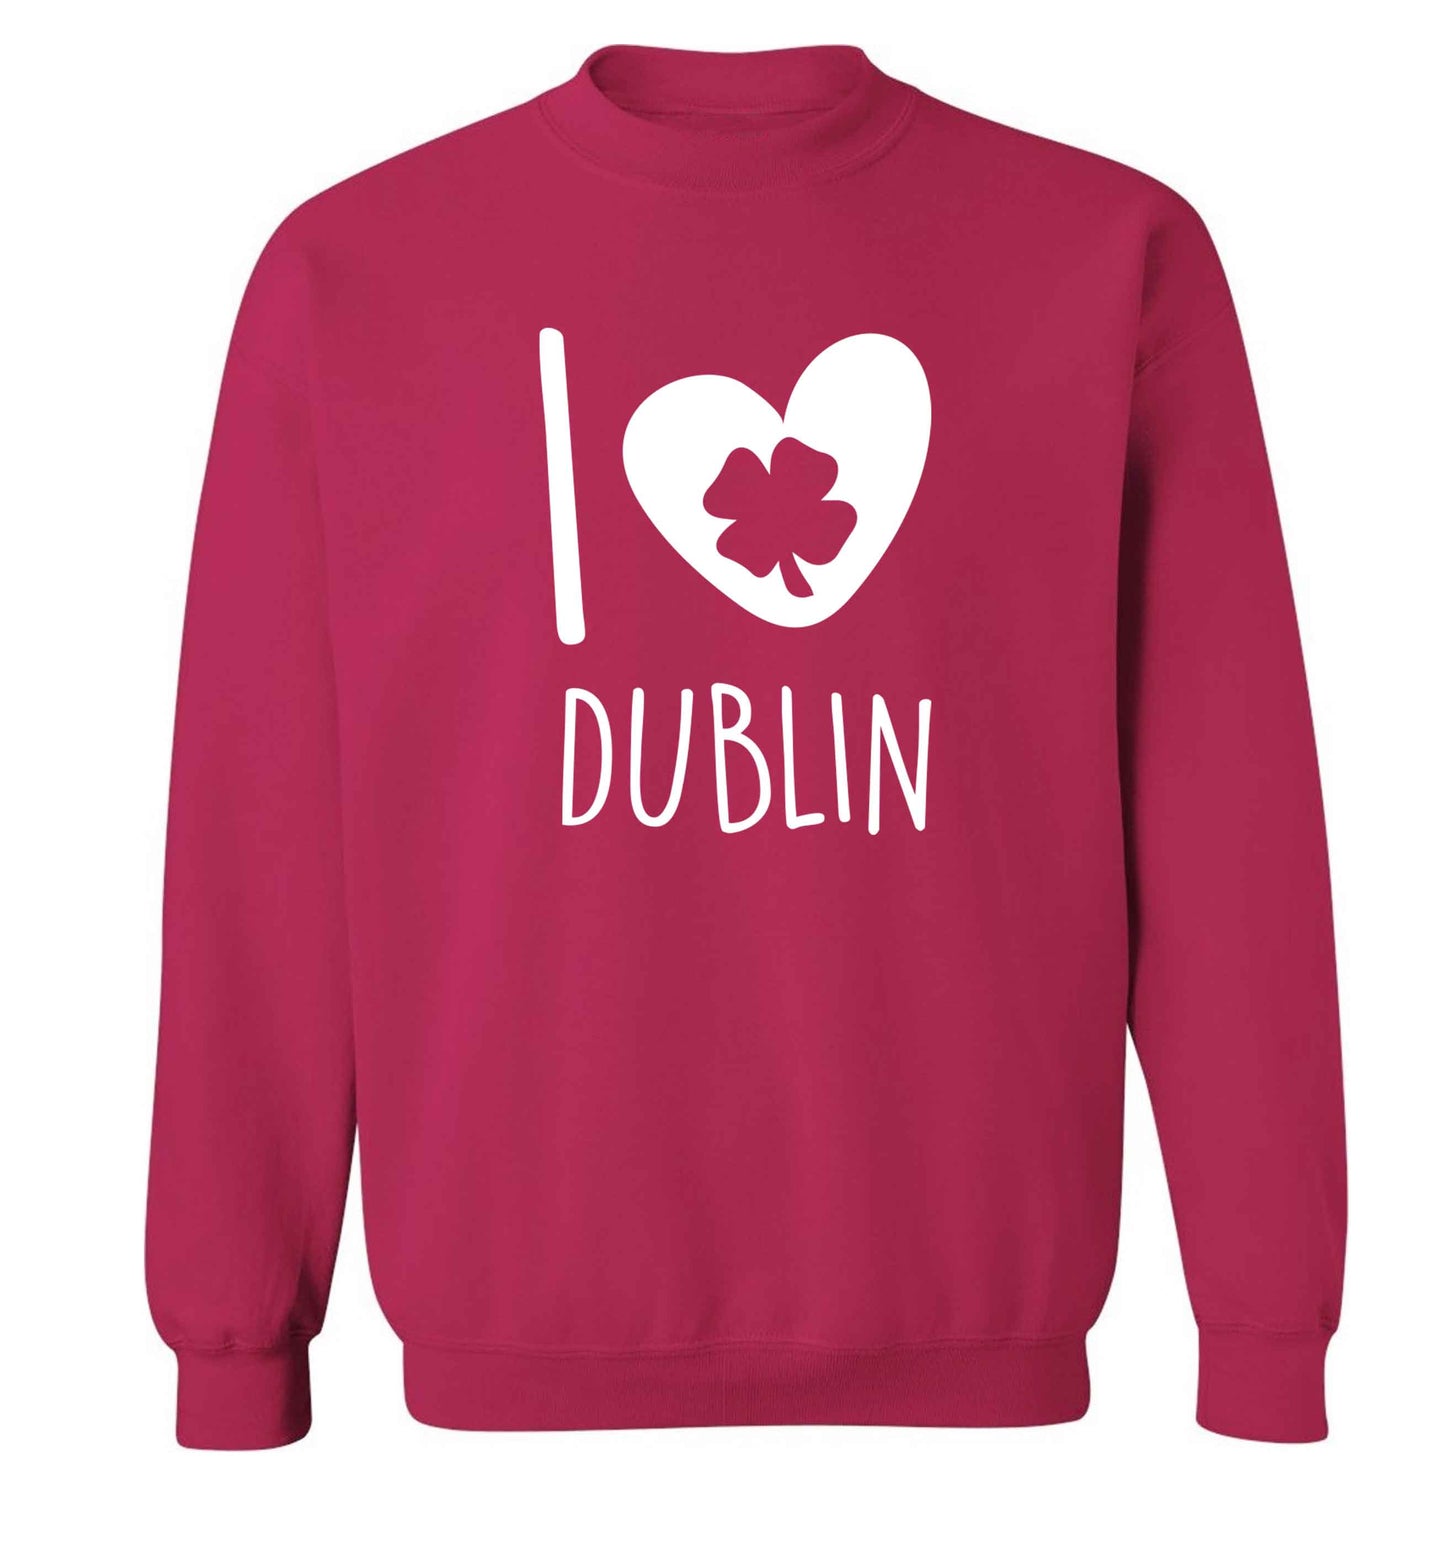 I love Dublin adult's unisex pink sweater 2XL